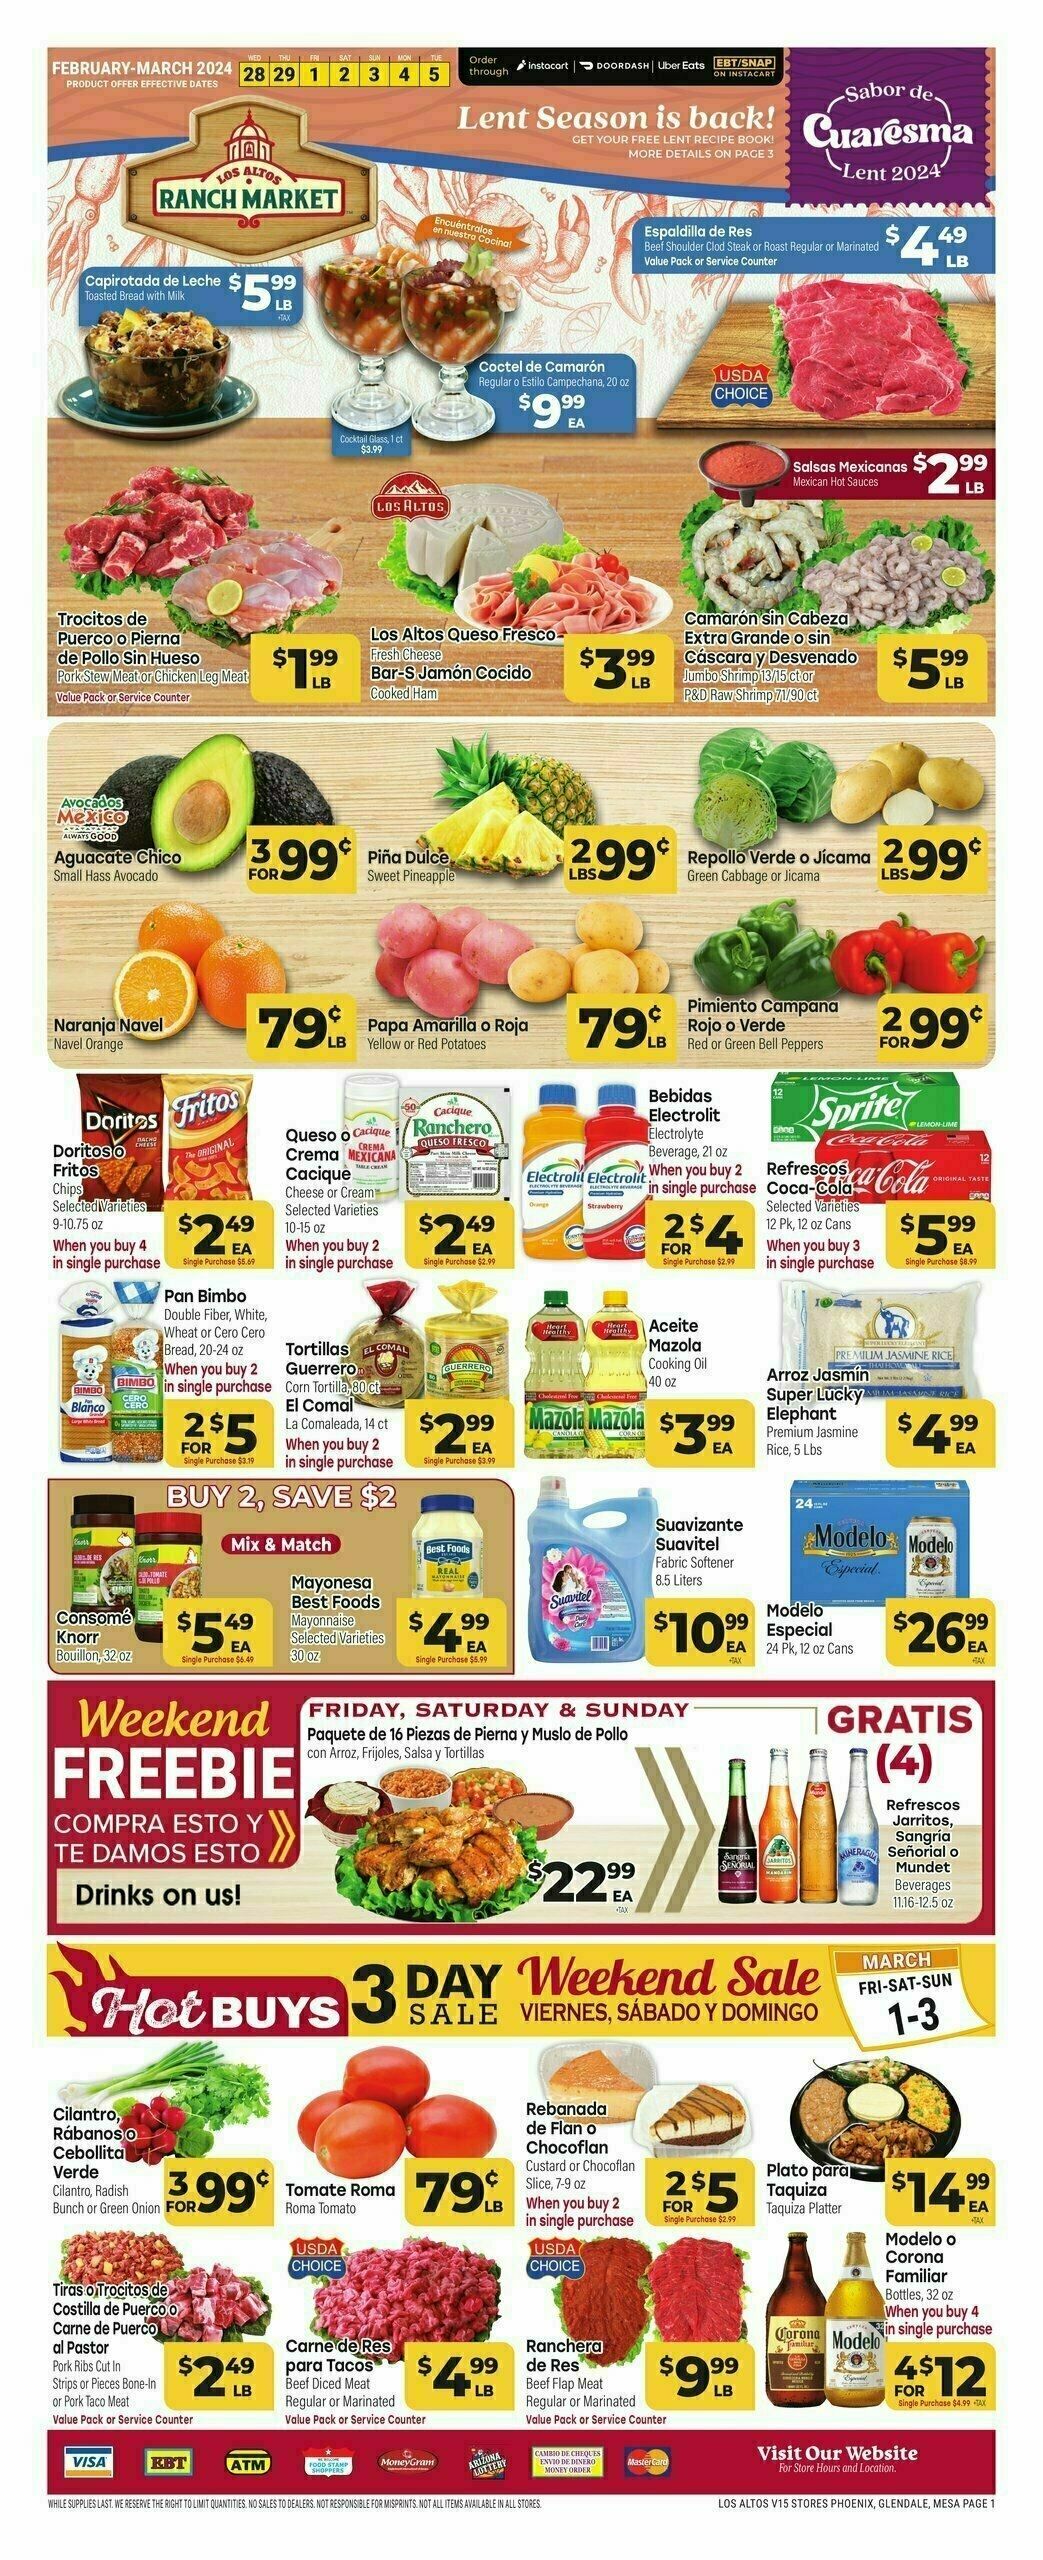 Cardenas Market Weekly Ad from February 28